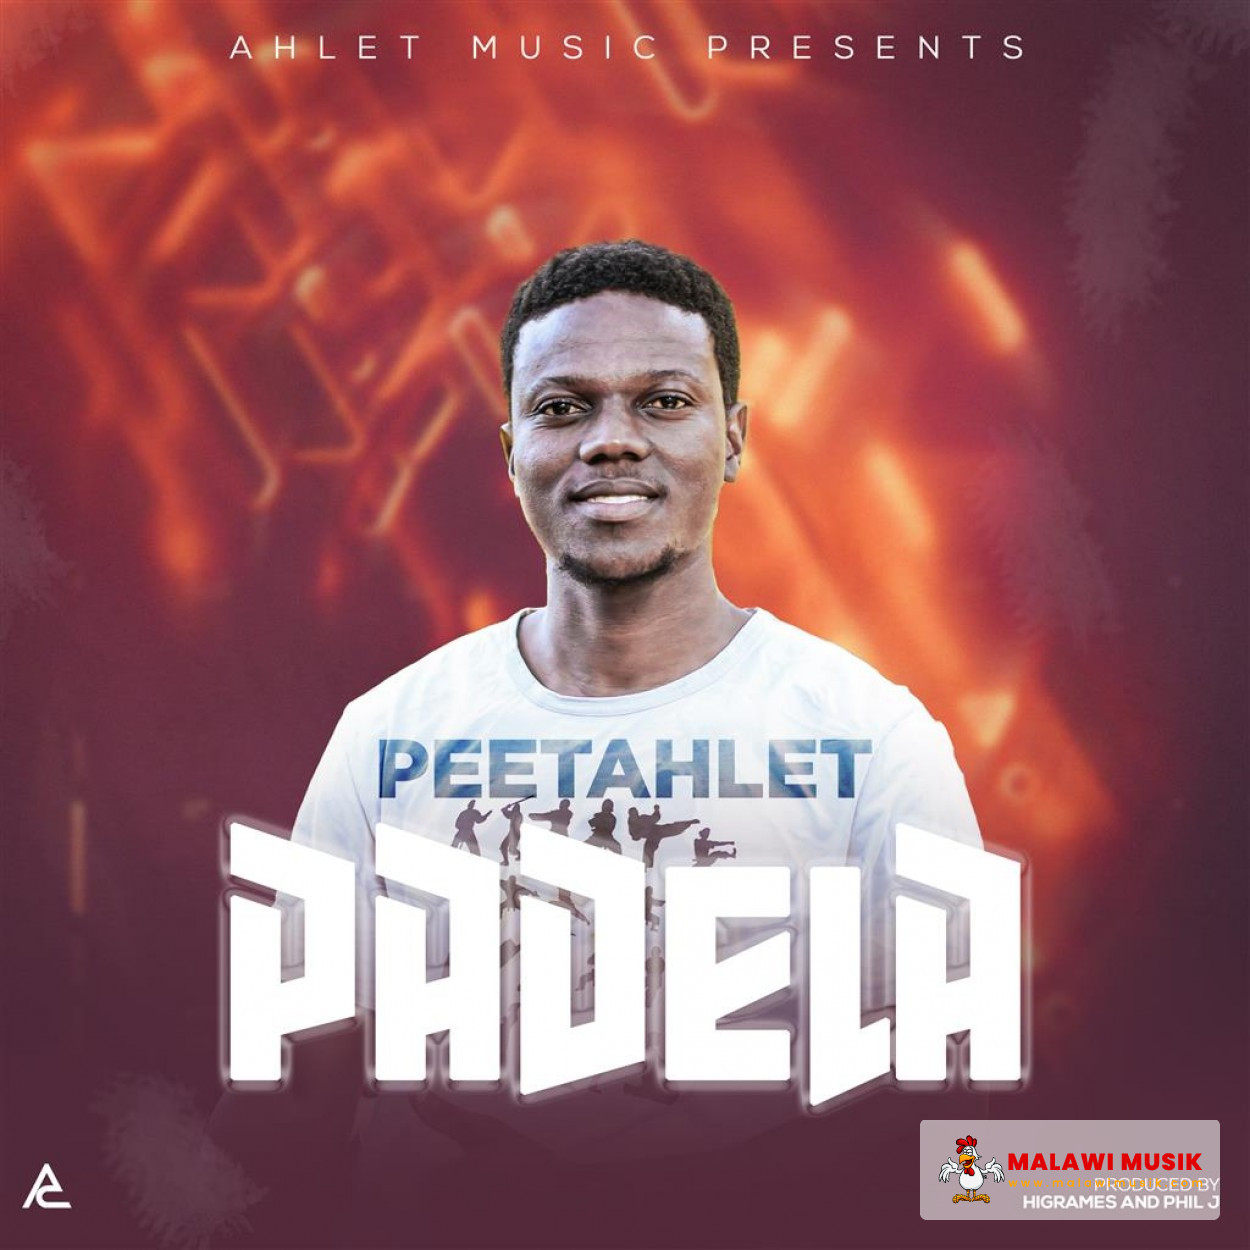 Peetahlet-Peetahlet - Padela (Prod. Higrames & Phil J)-song artwork cover